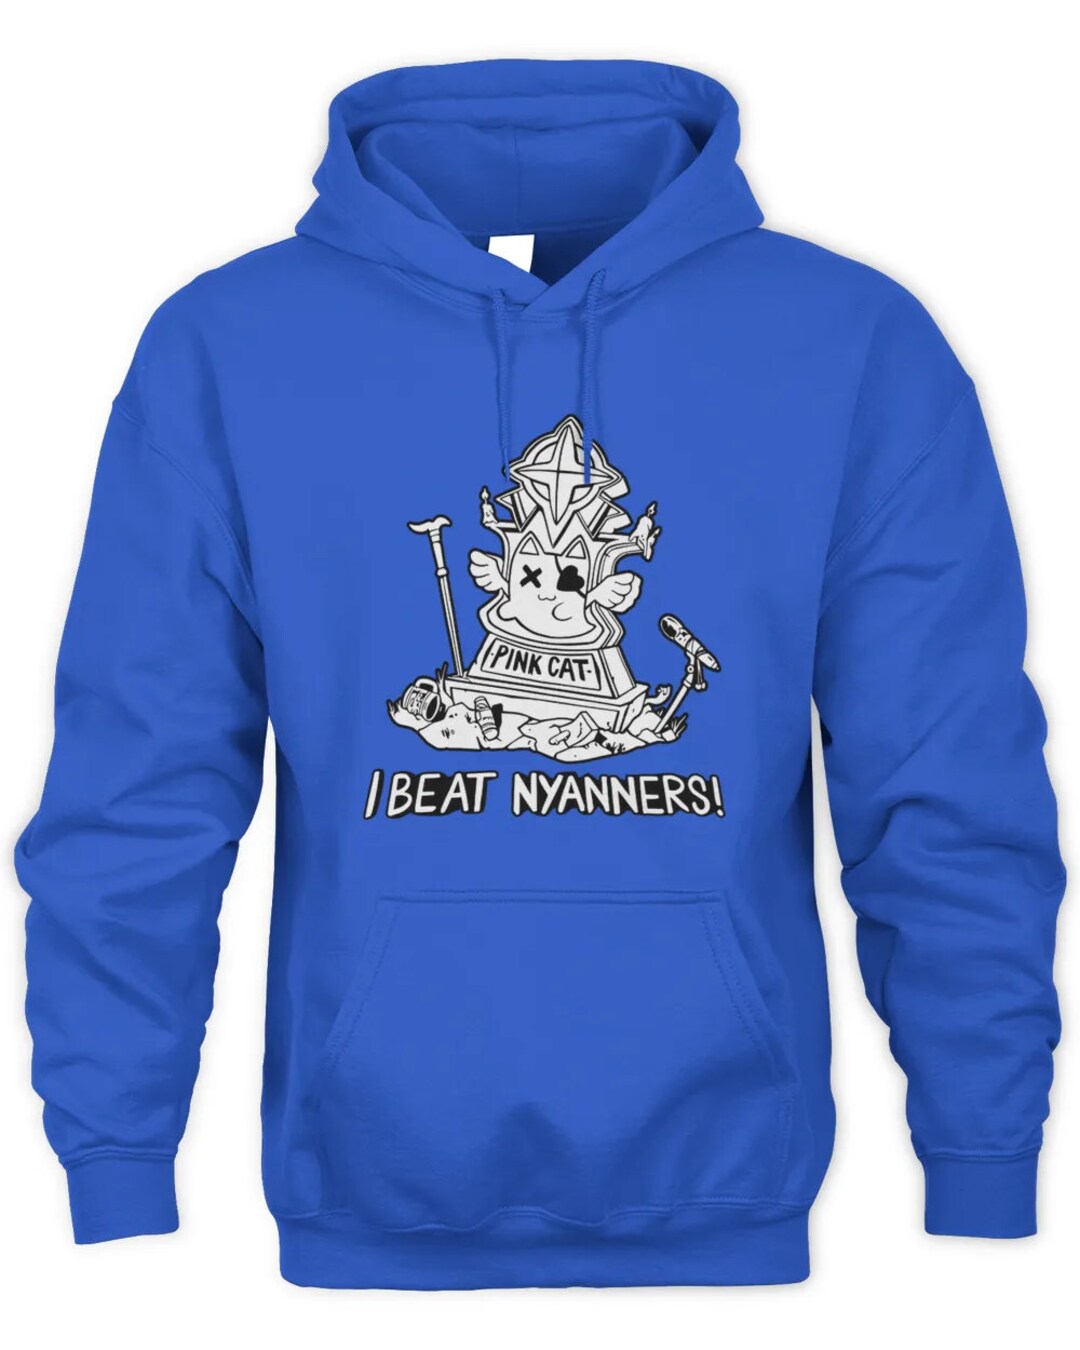 Nyanners Merch Shirt Hoodie Sweatshirt Royal Blue - Etsy